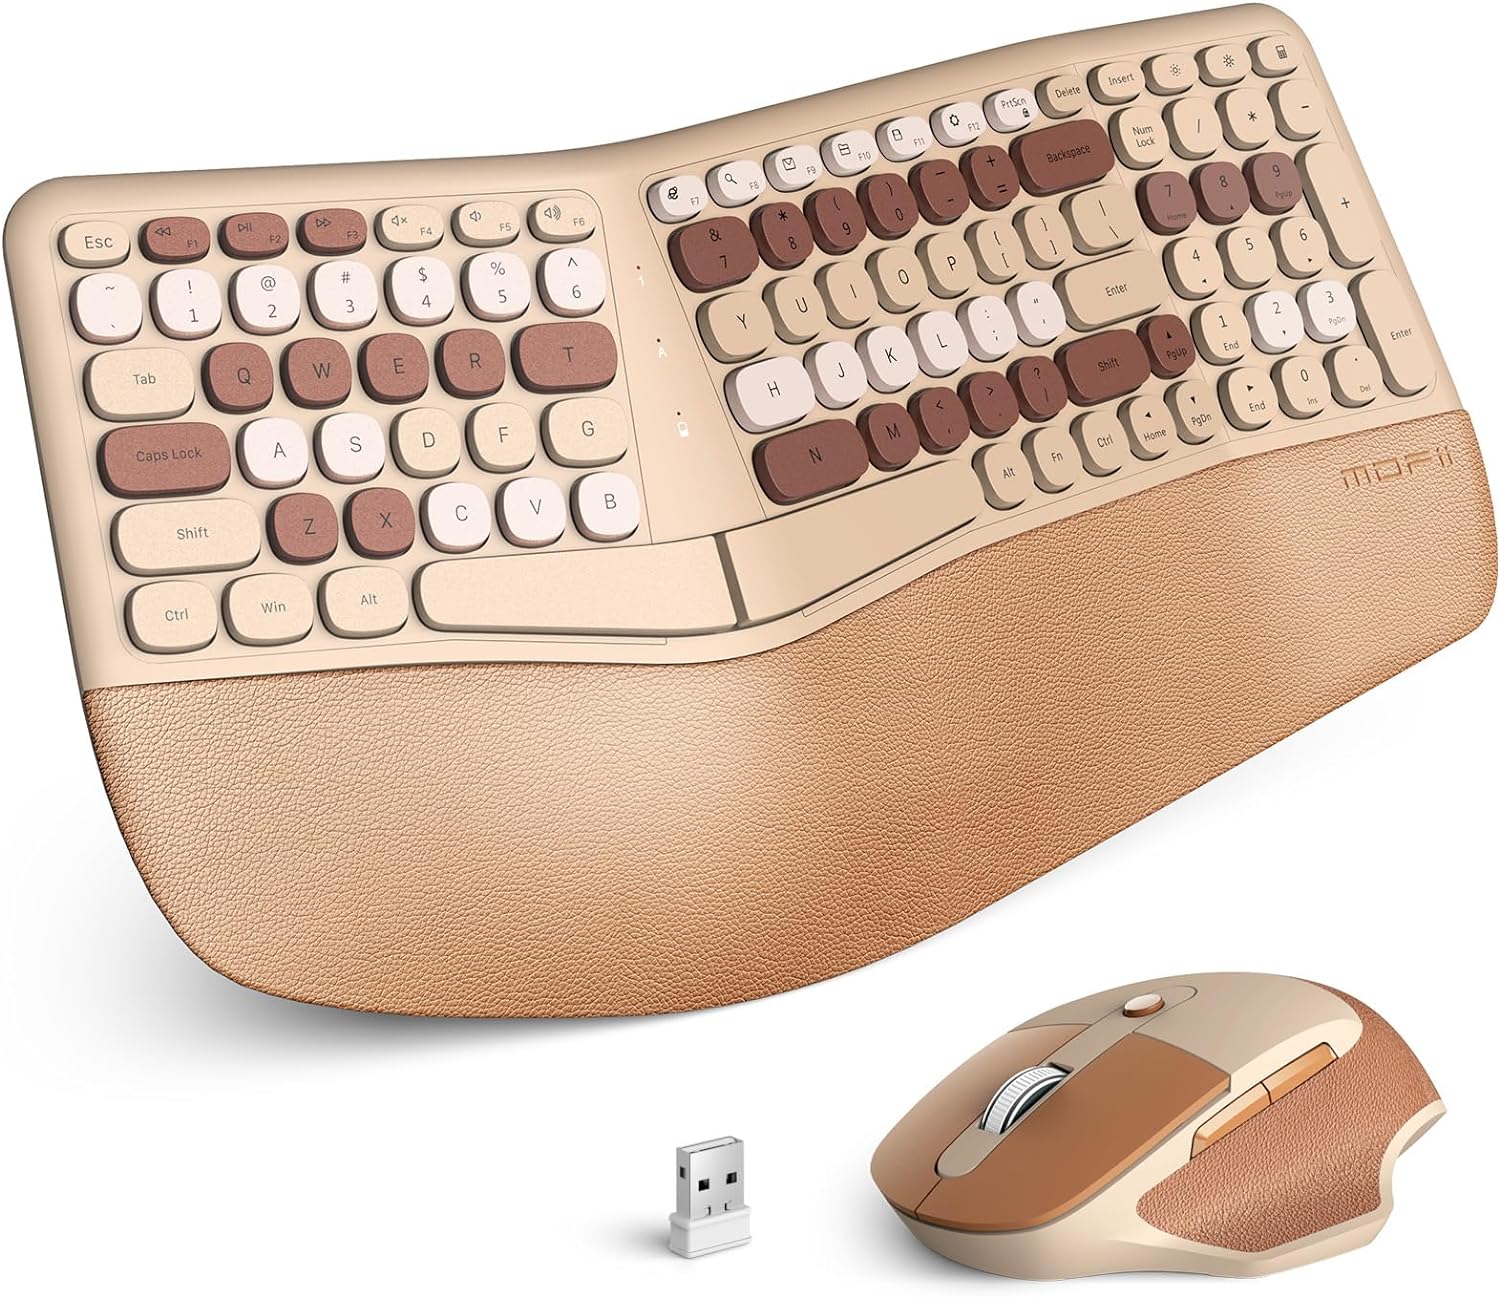 Ergonomic Wireless Keyboard and Mouse Combo - Milk Tea